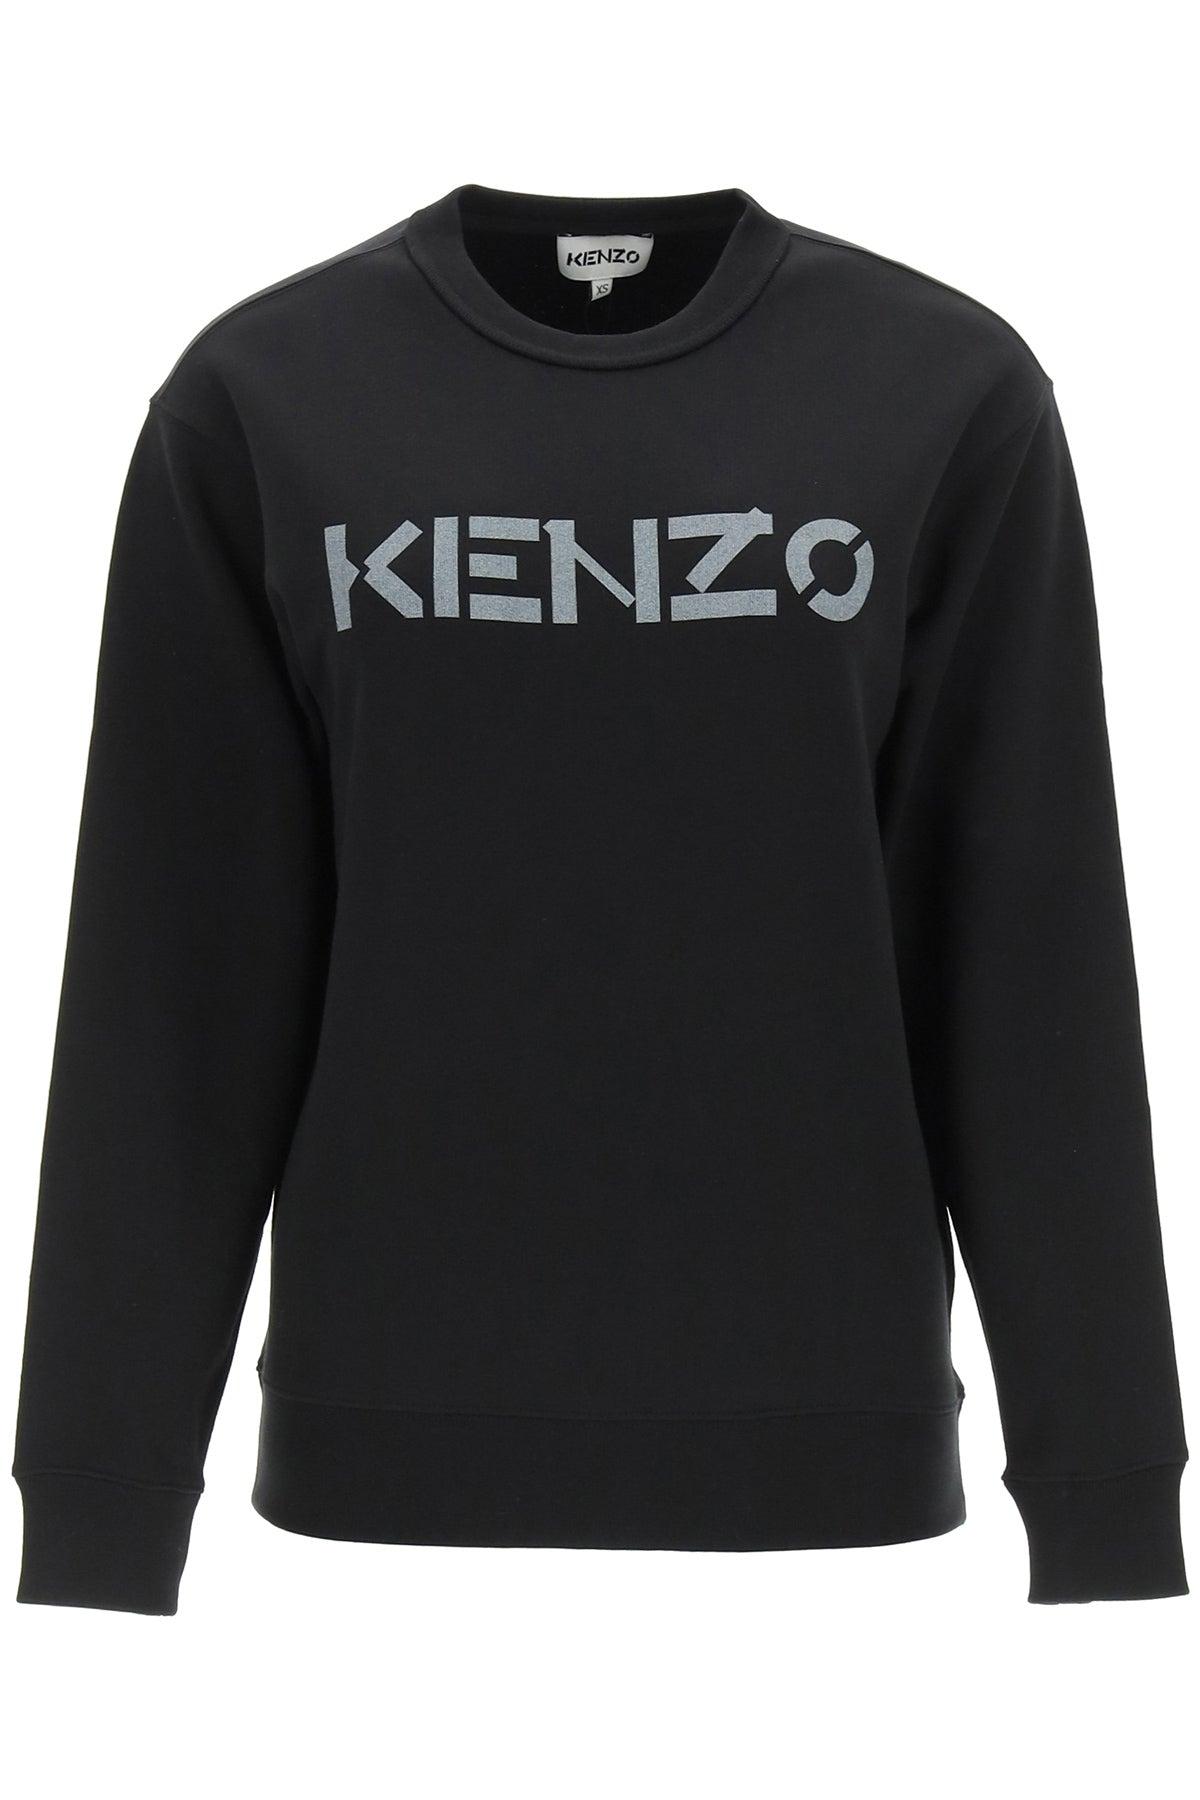 KENZO Cotton Crewneck Sweatshirt in Black - Lyst